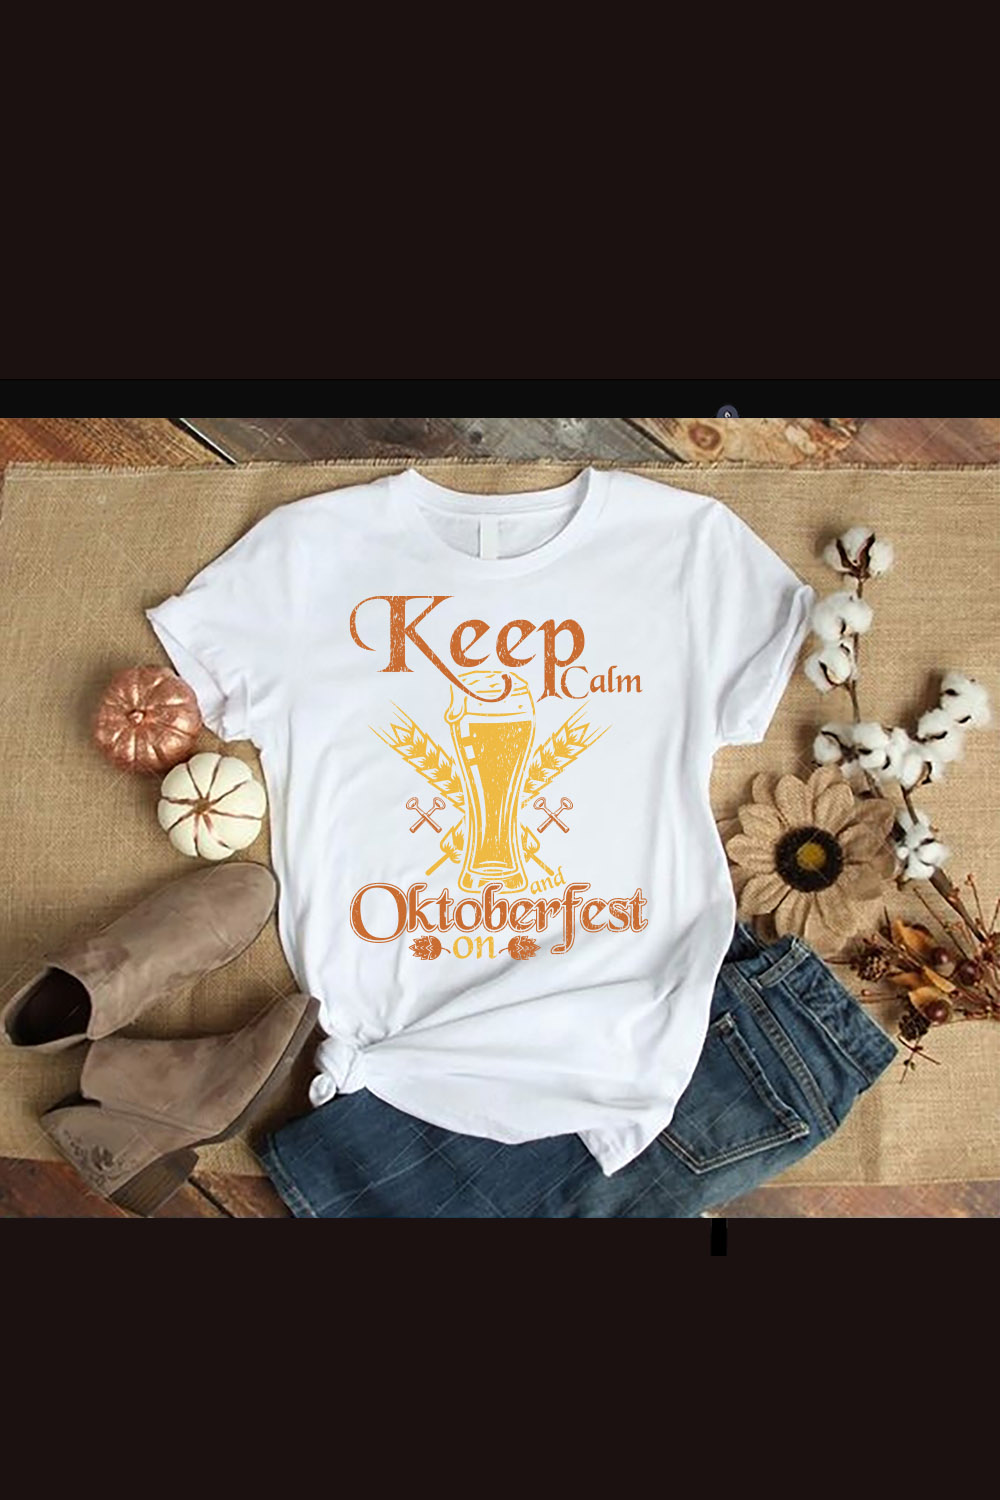 Oktoberfest typography t shirt design pinterest preview image.